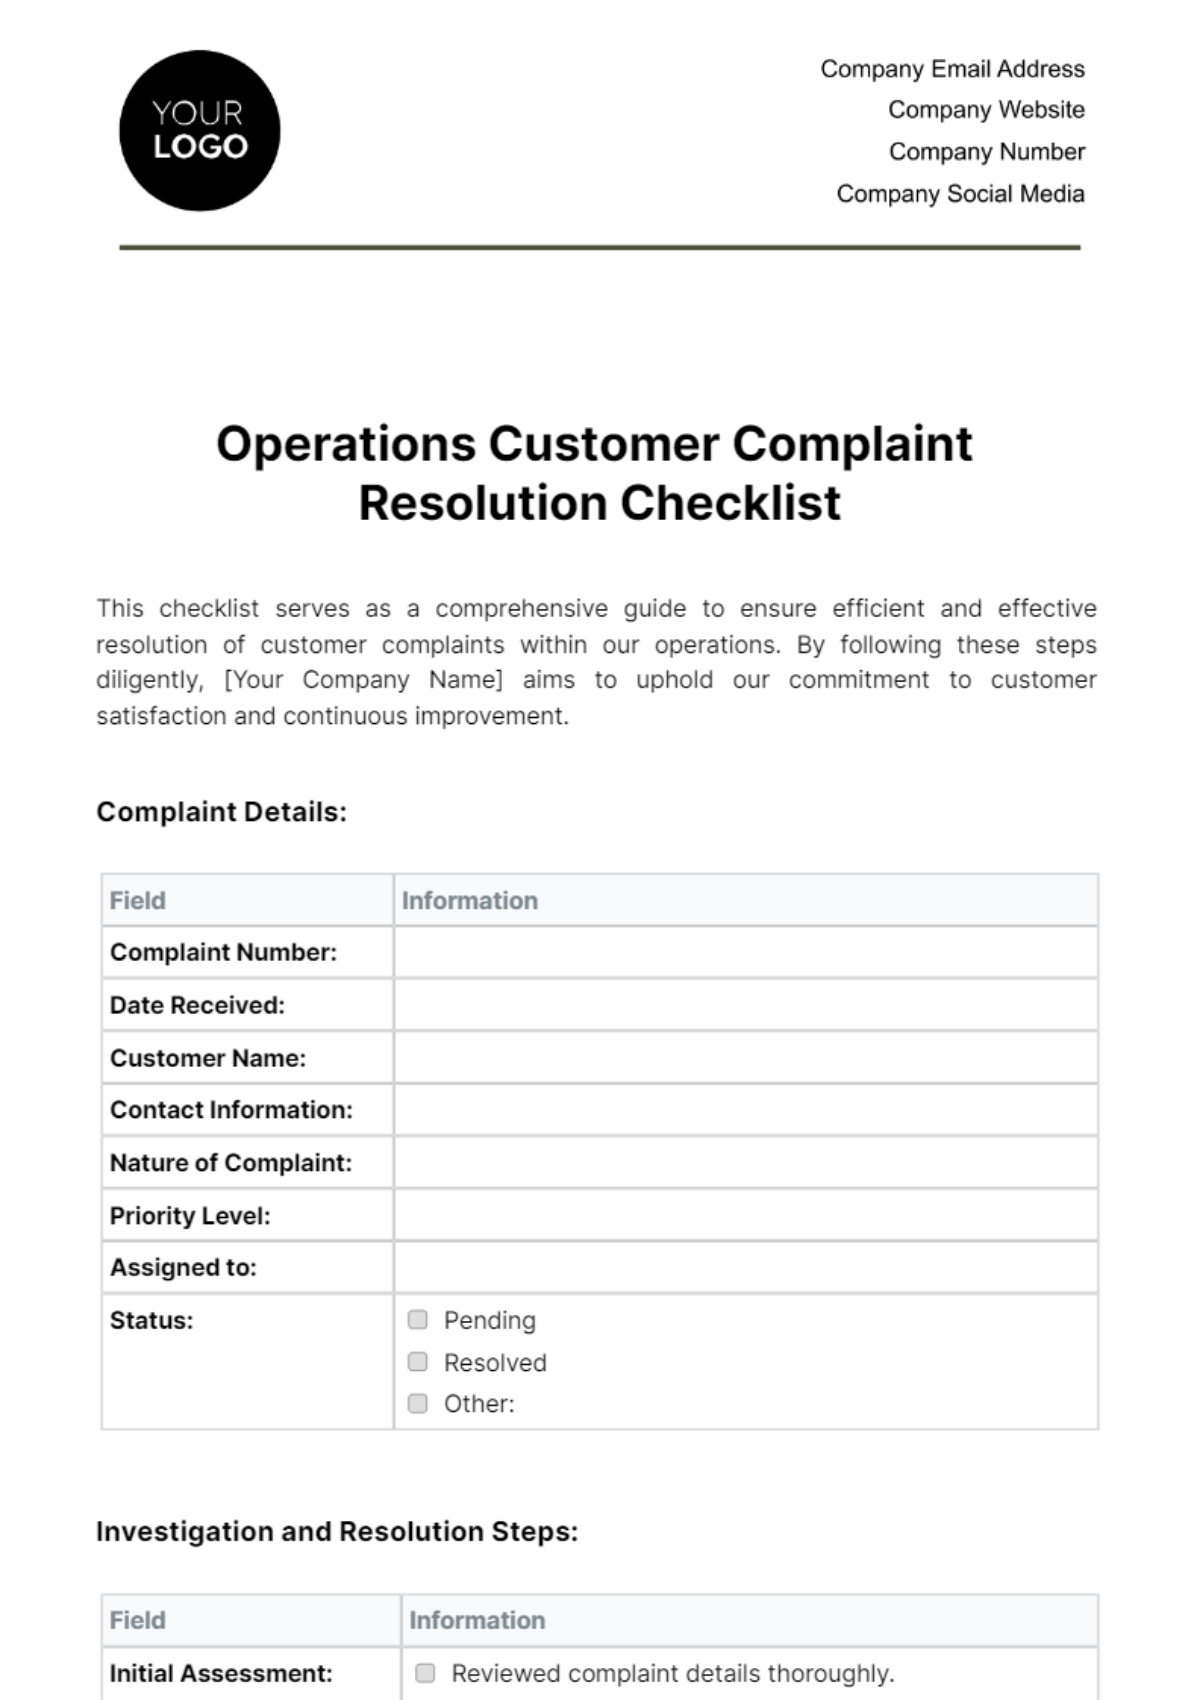 Operations Customer Complaint Resolution Checklist Template